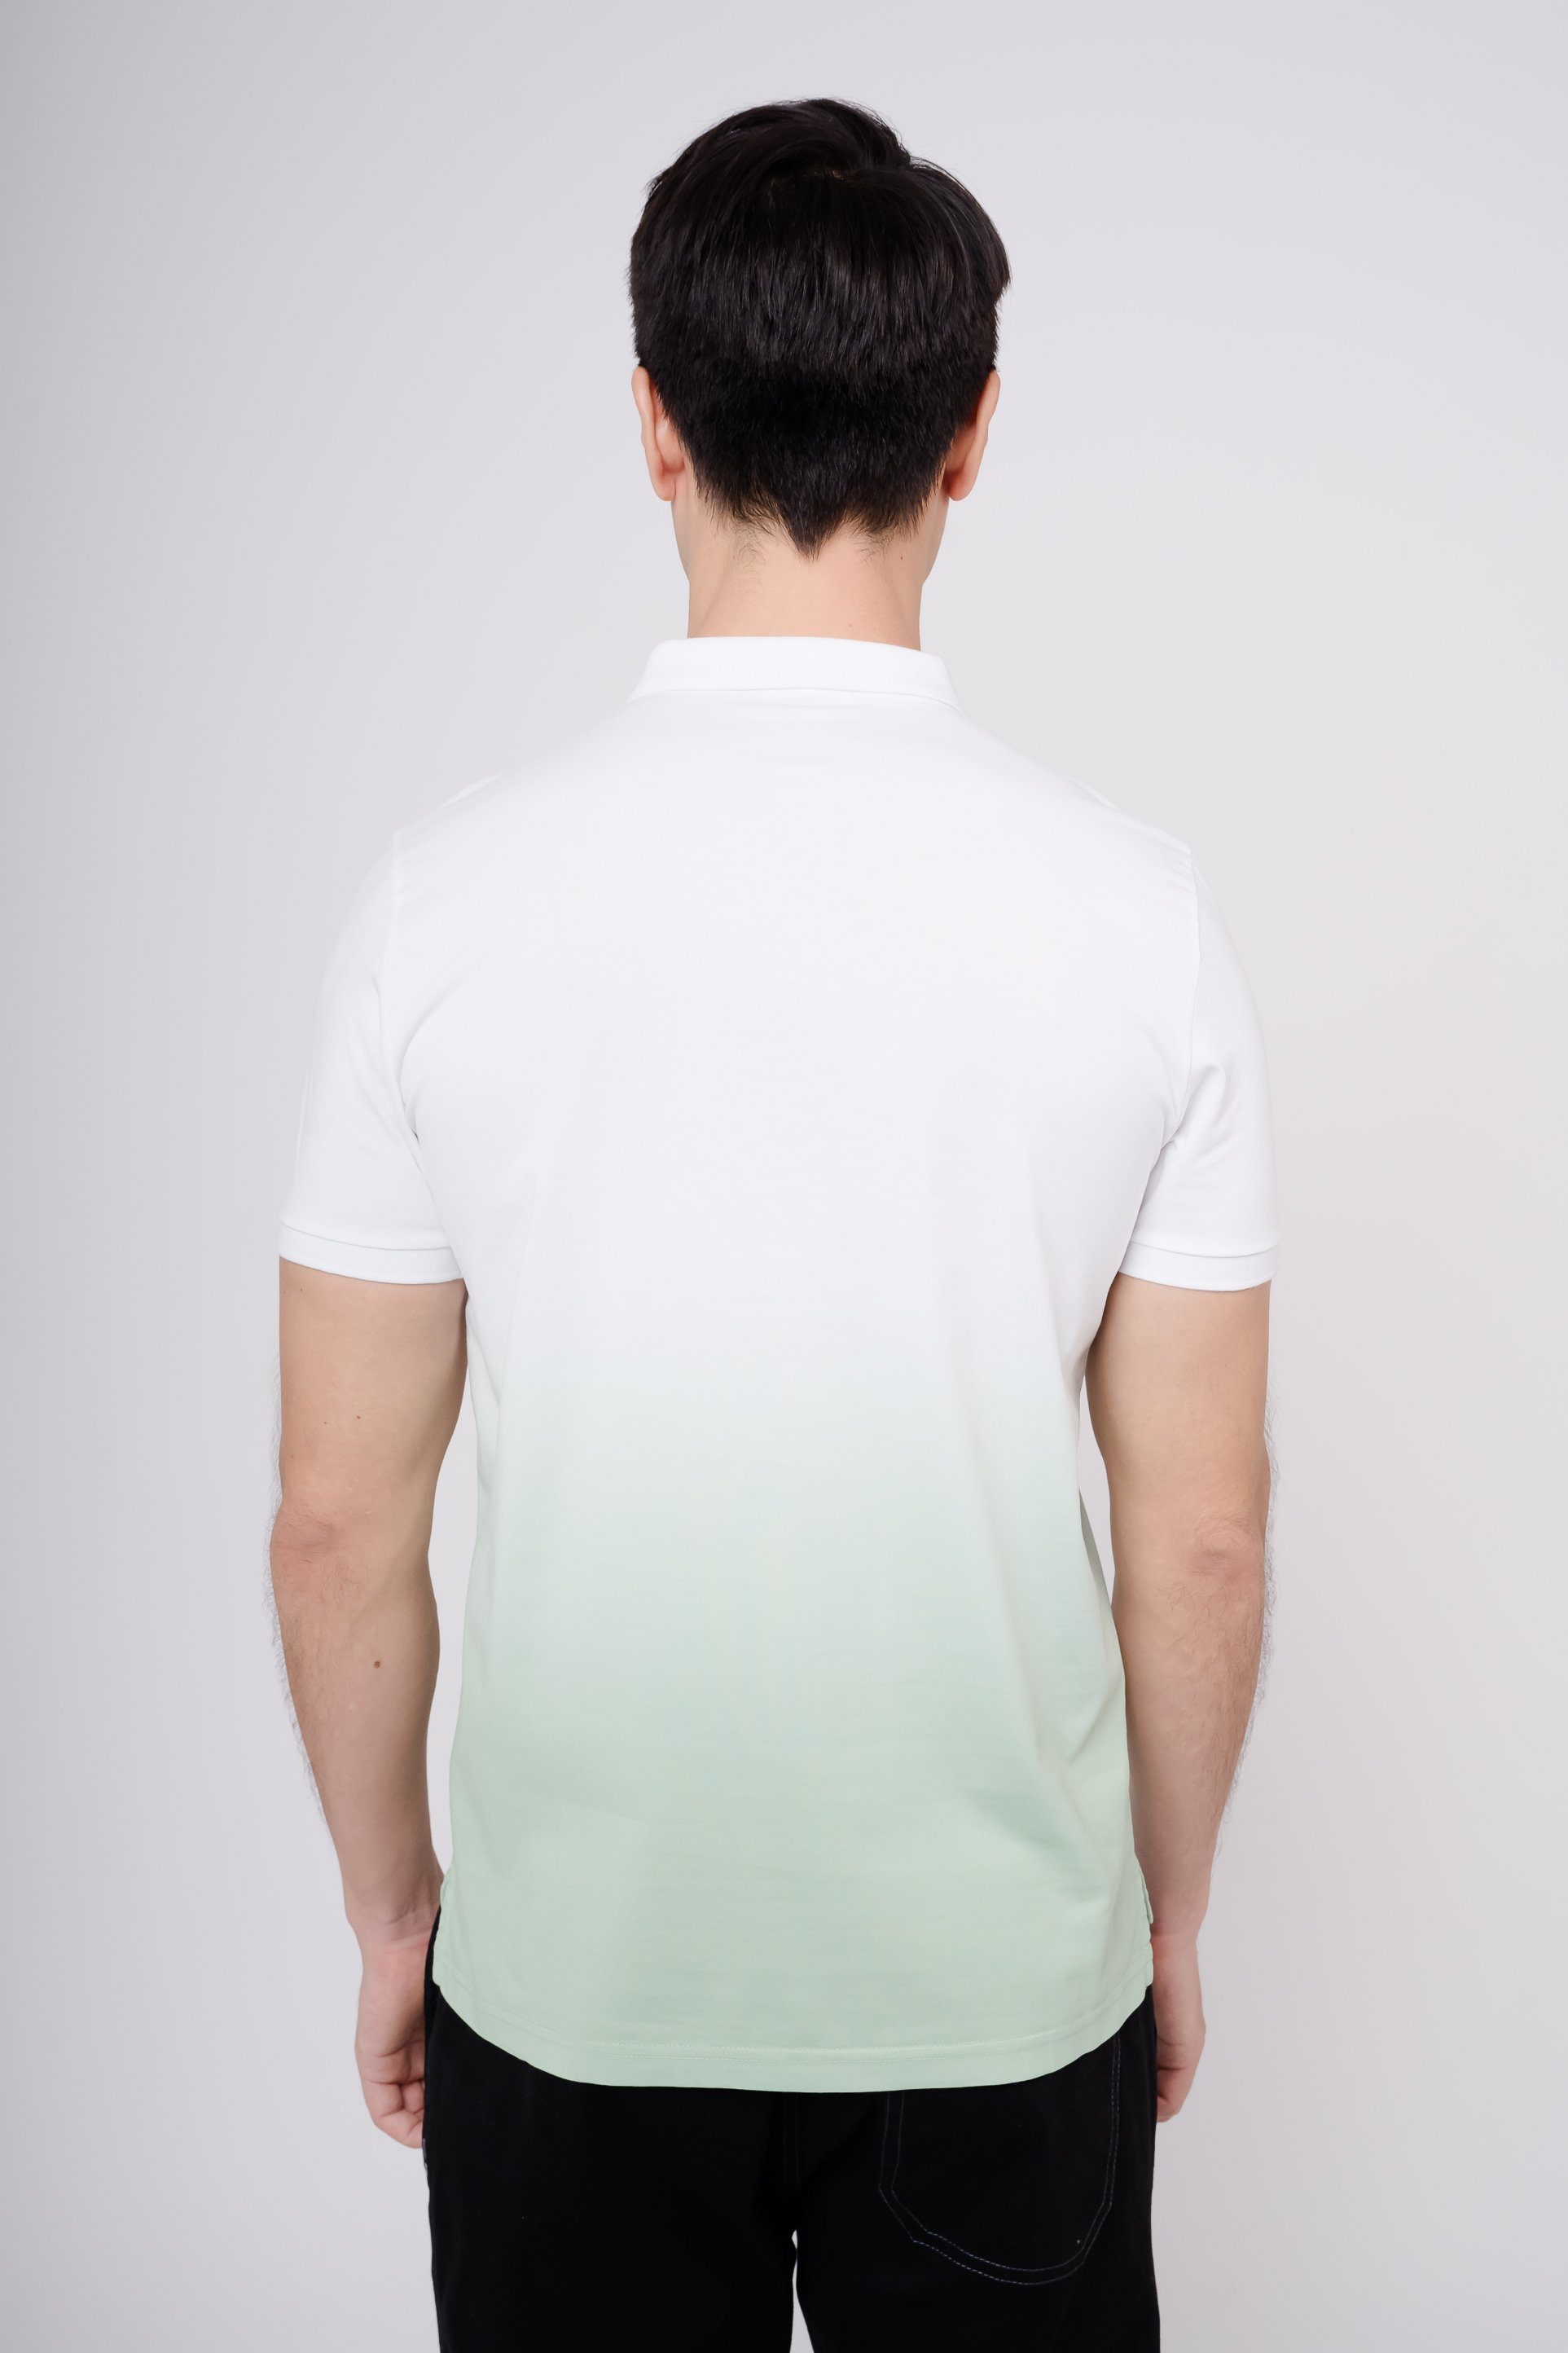 Dye-Effekt Dip grün-weiß mit Poloshirt GIORDANO